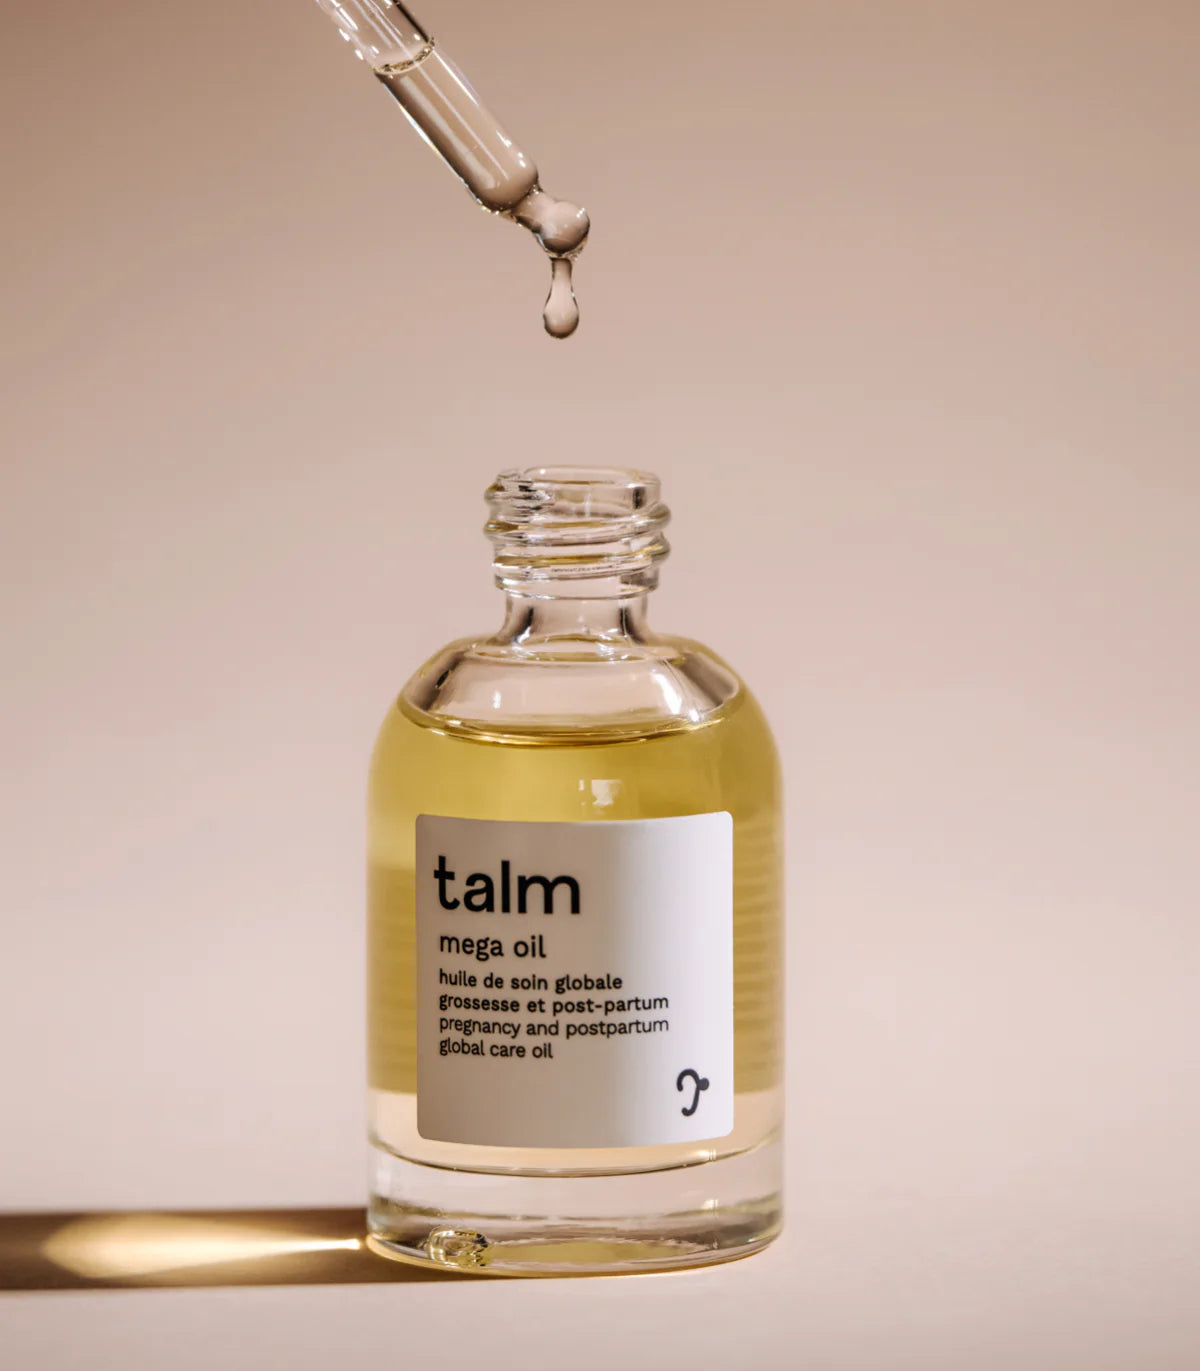 Talm - Mega oil - Global skincare oil for pregnancy and postpartum (30ml)